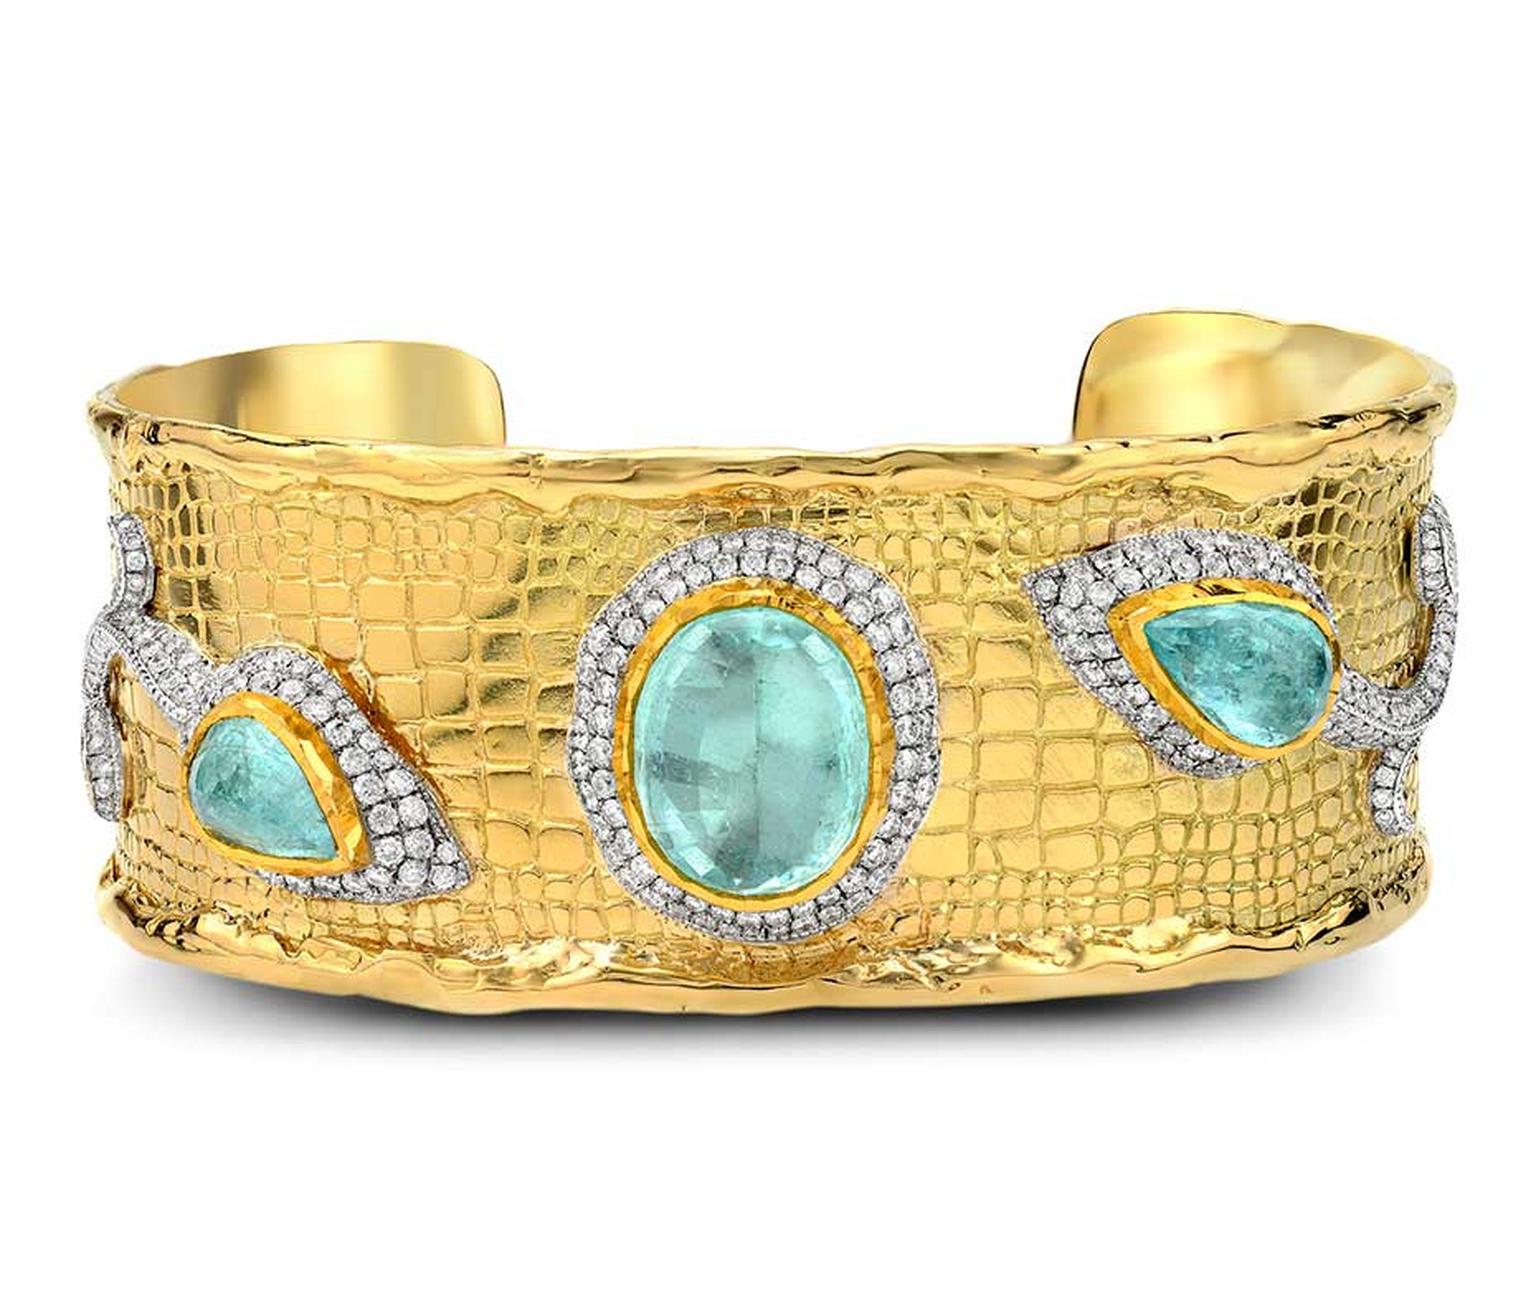 Victor Velyan gold cuff with Paraiba tourmalines and diamonds